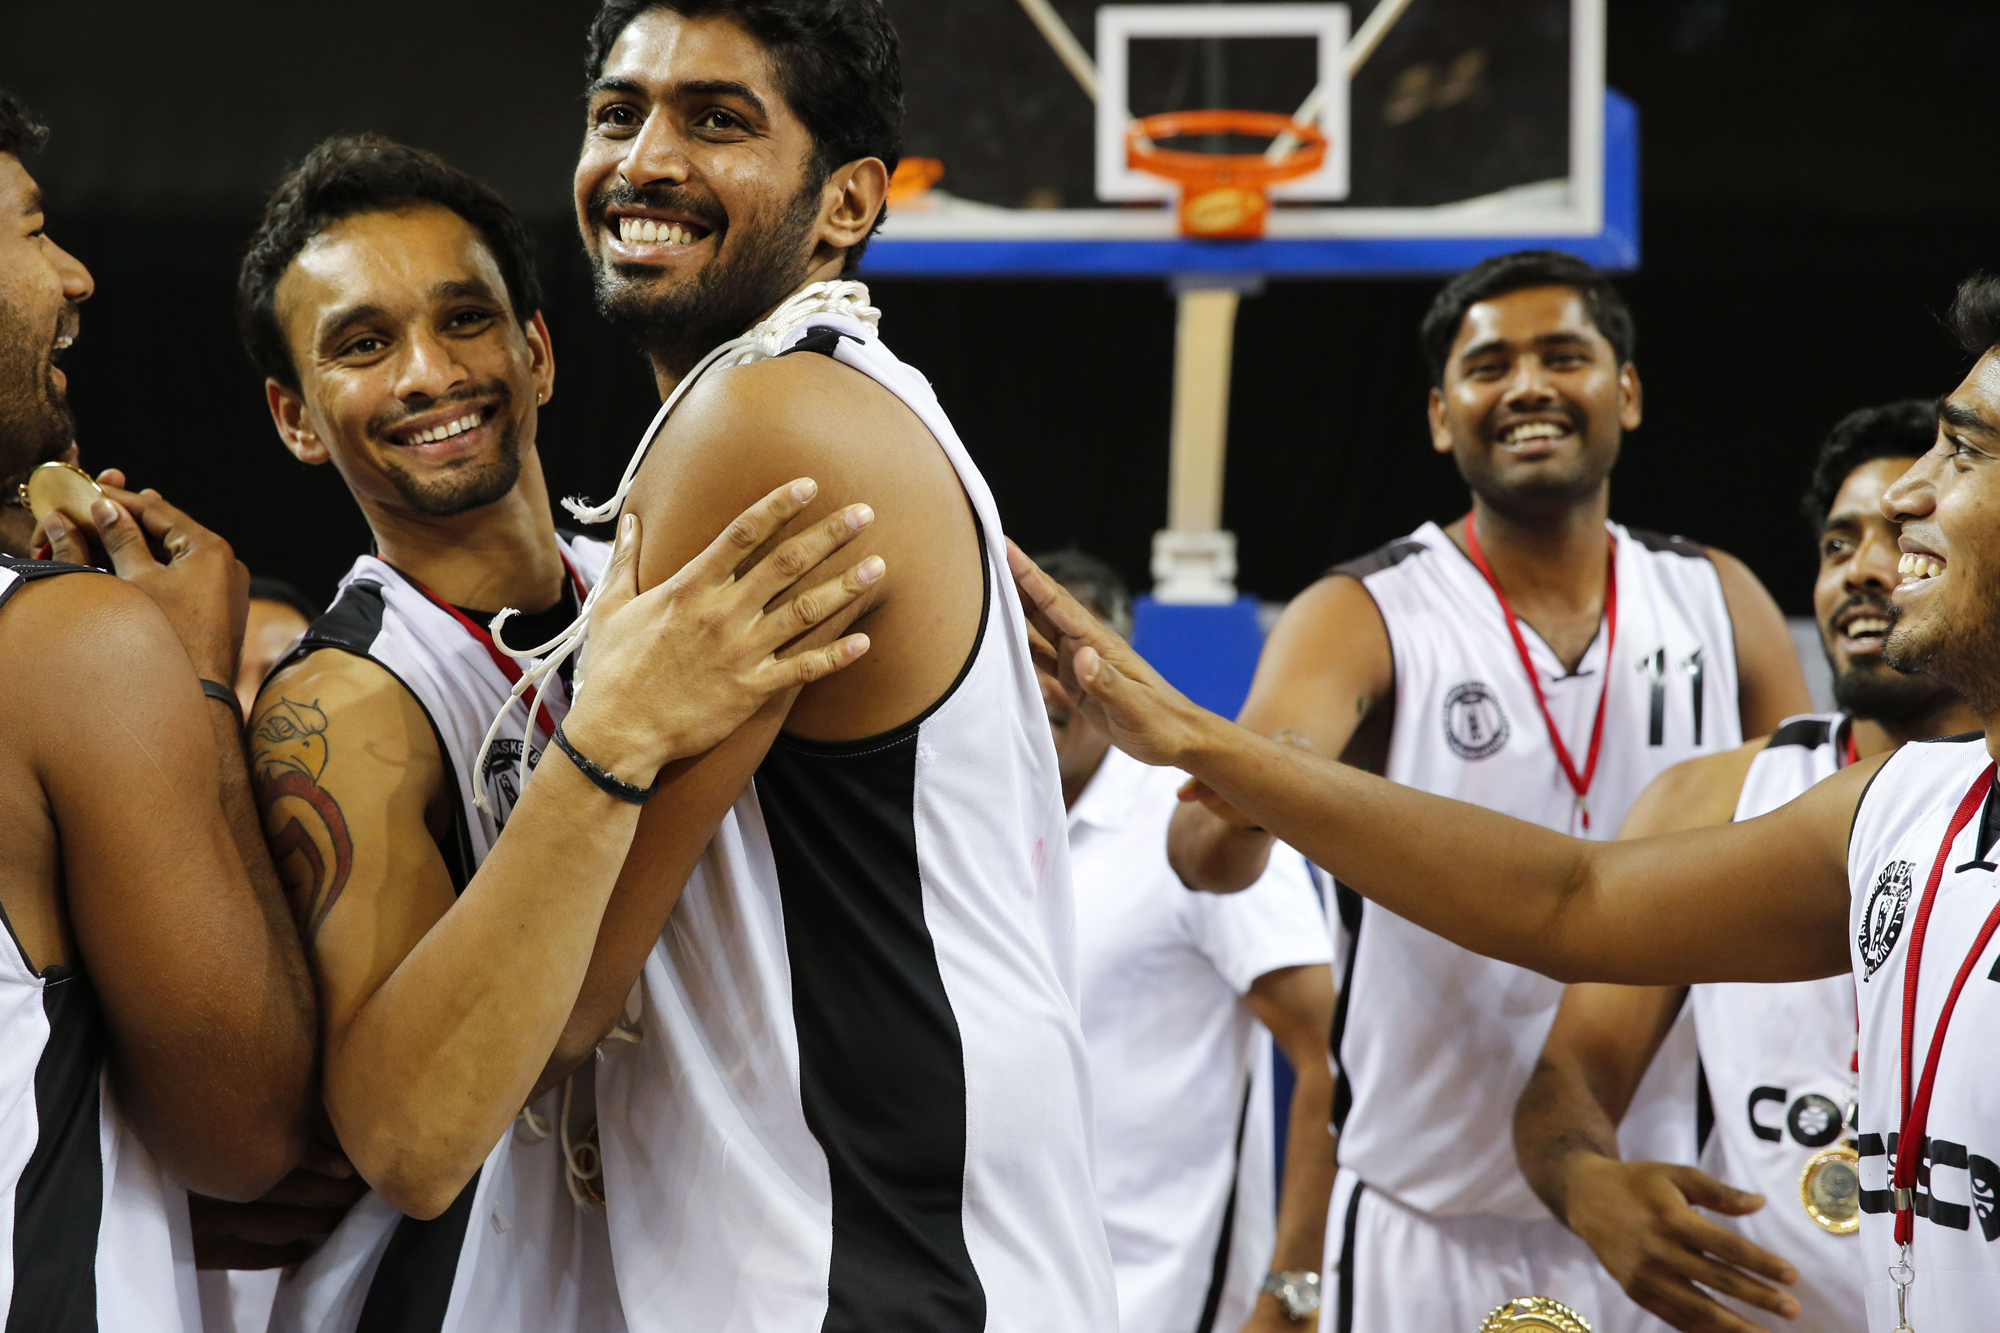 Pratham Singh, Riken Pethani, Akilan Pari and members of the Tamil Nadu team celebrate their victory at the 64th Senior National Basketball Championship, Delhi, 2014.